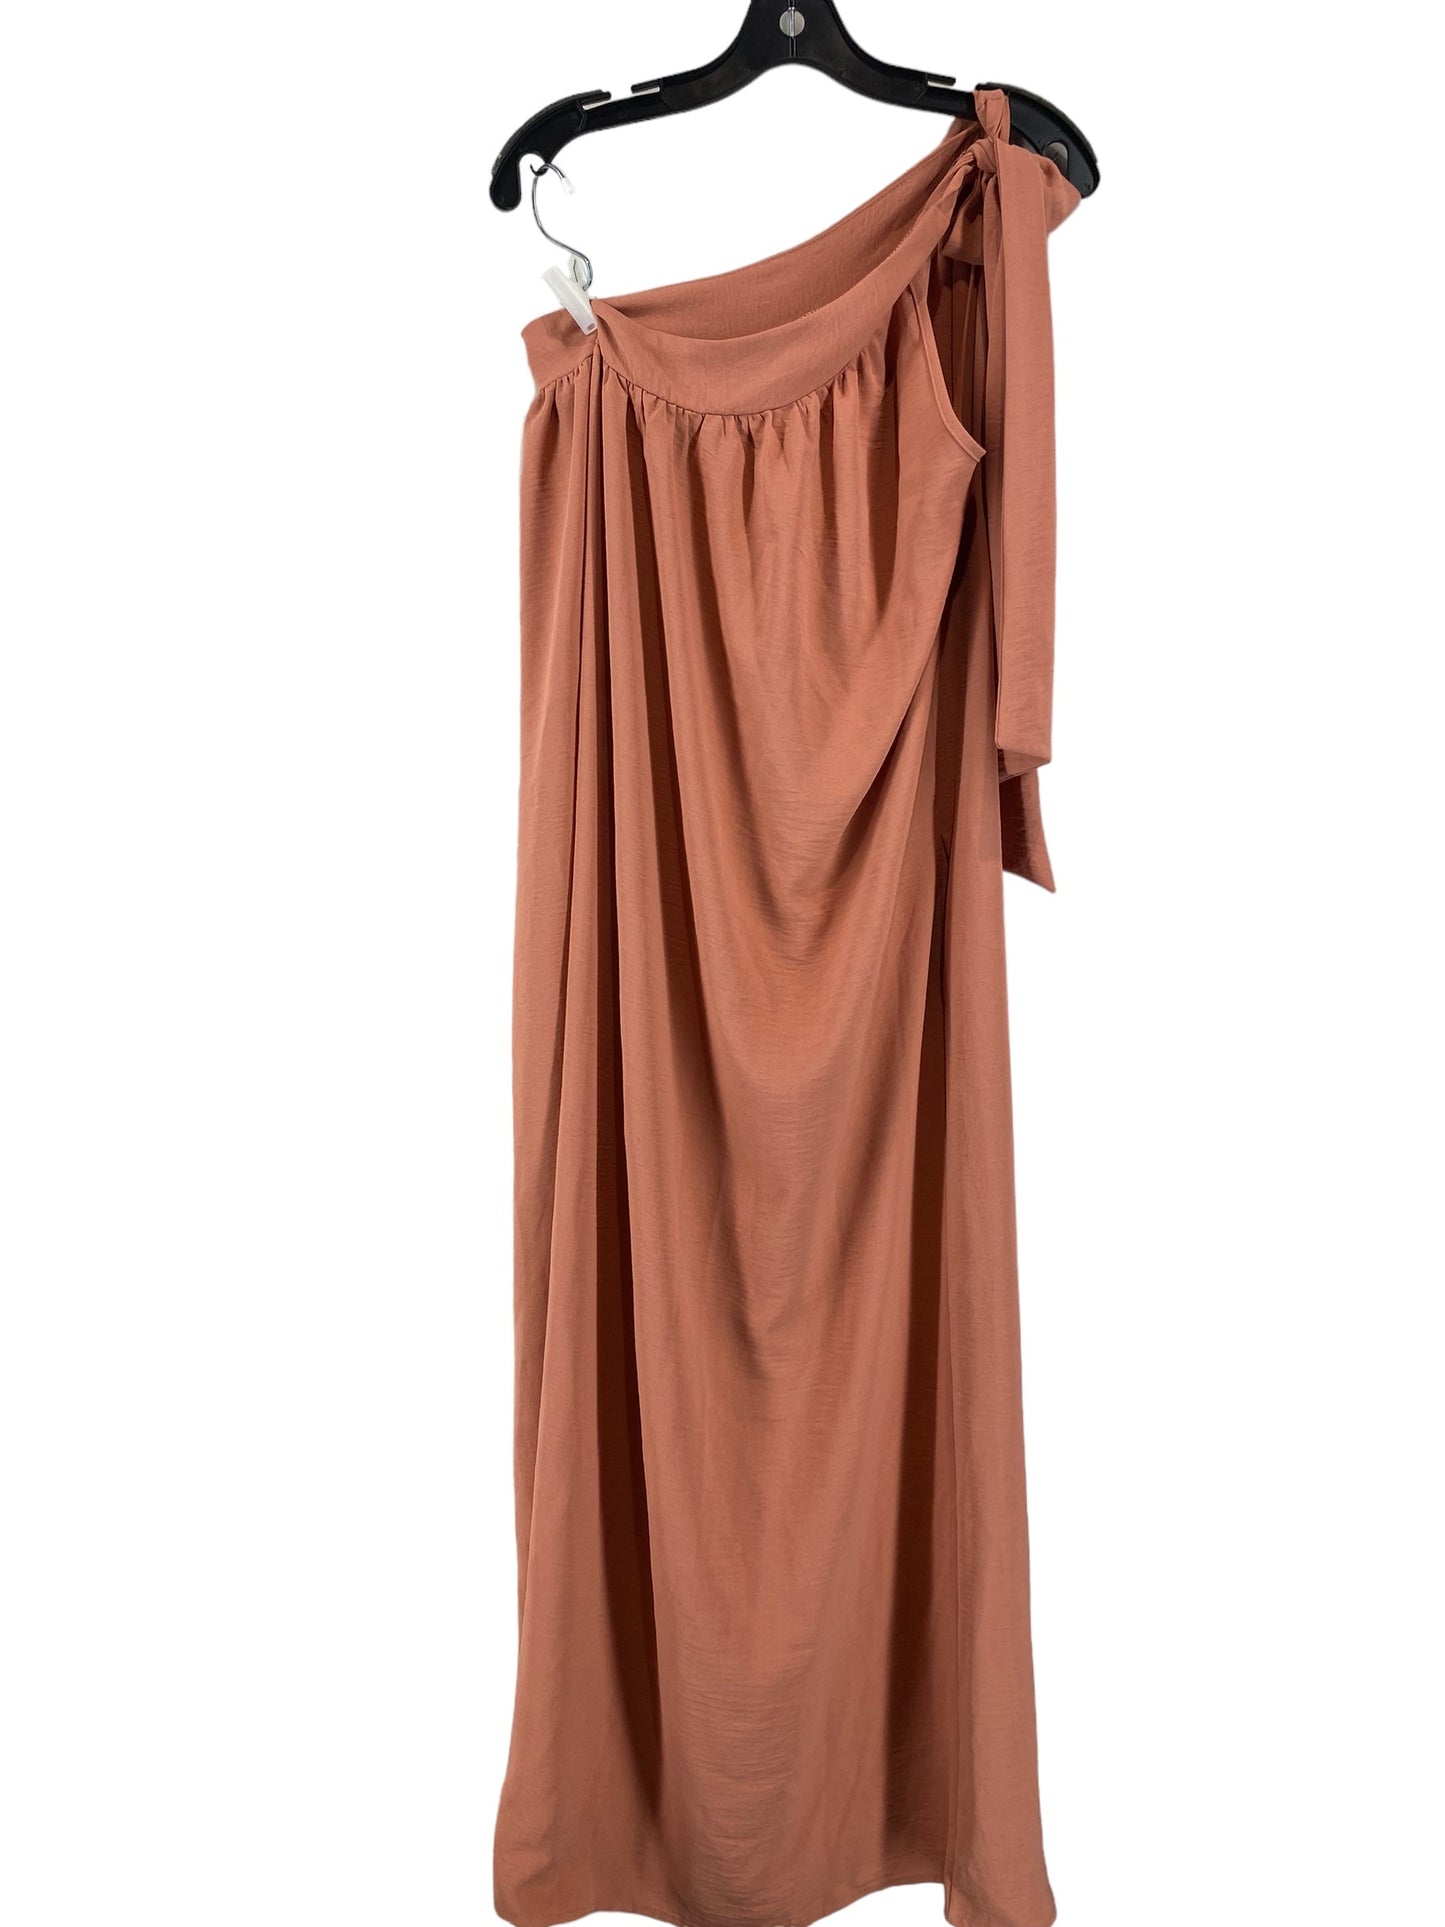 Dress Casual Maxi By Jodifl  Size: S